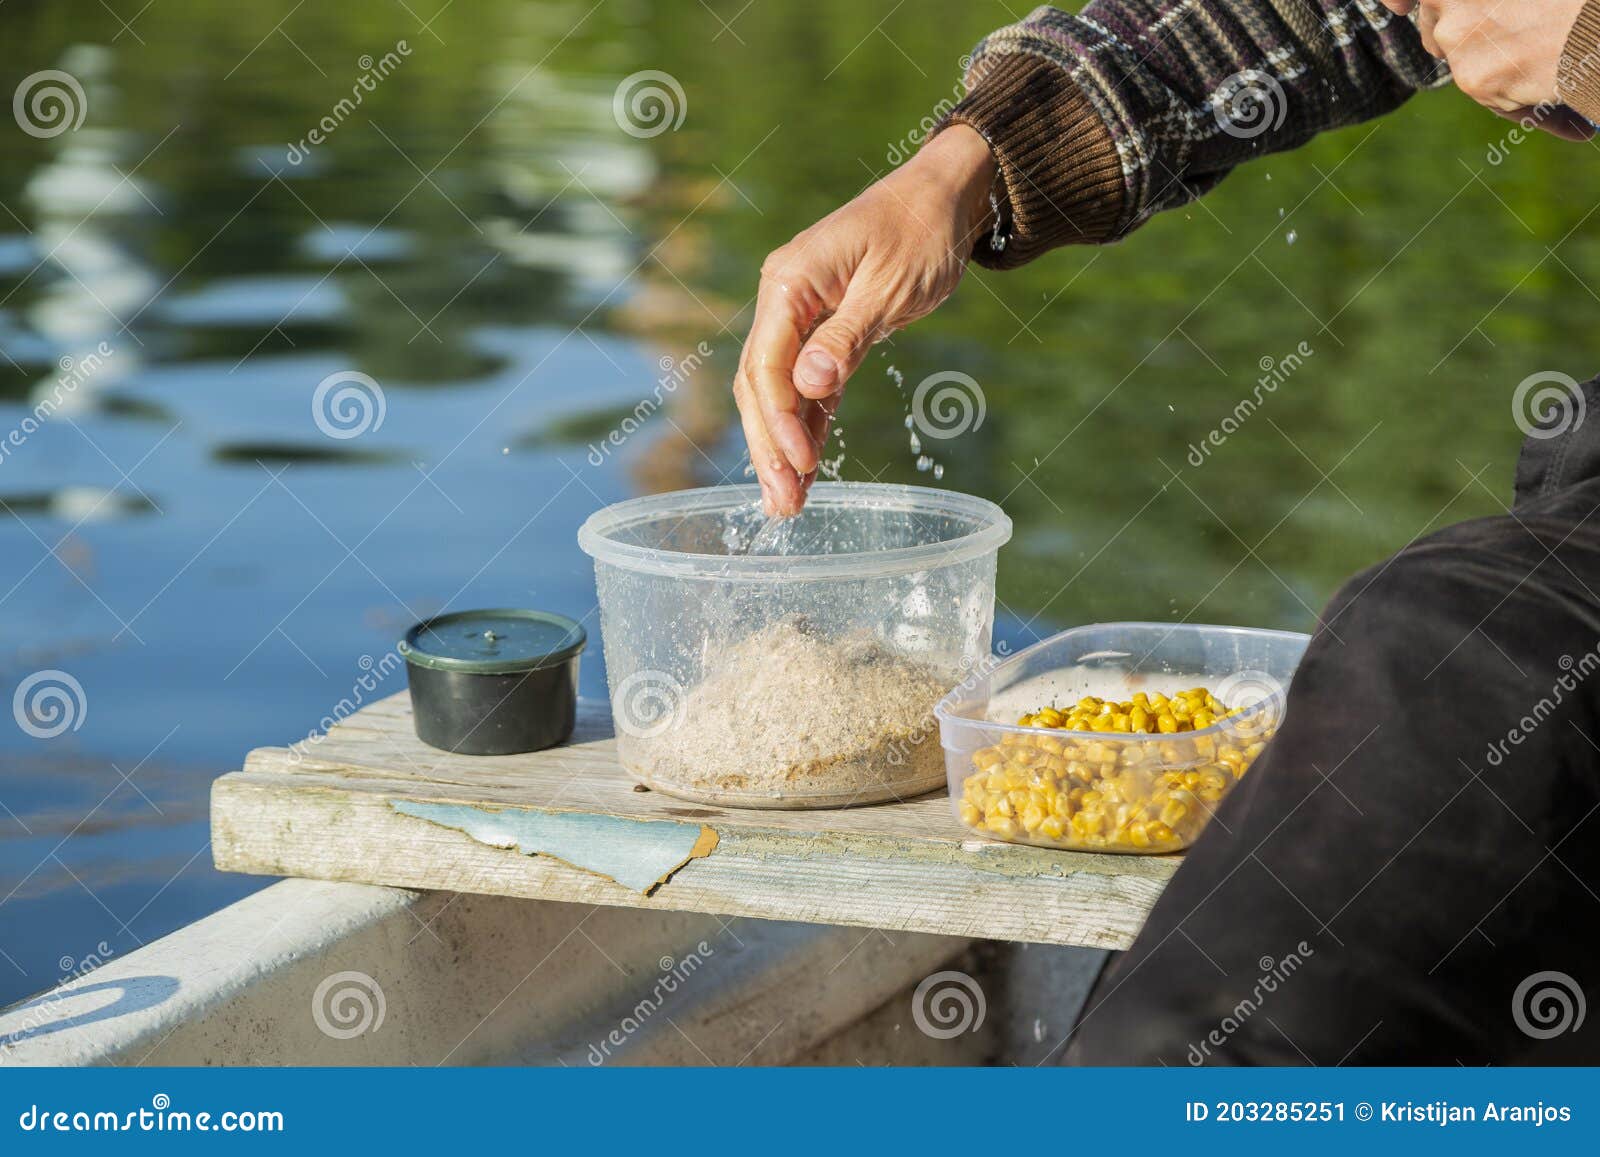 Close Up of Hands Preparing Fish Chum Stock Image - Image of bait, river:  203285251